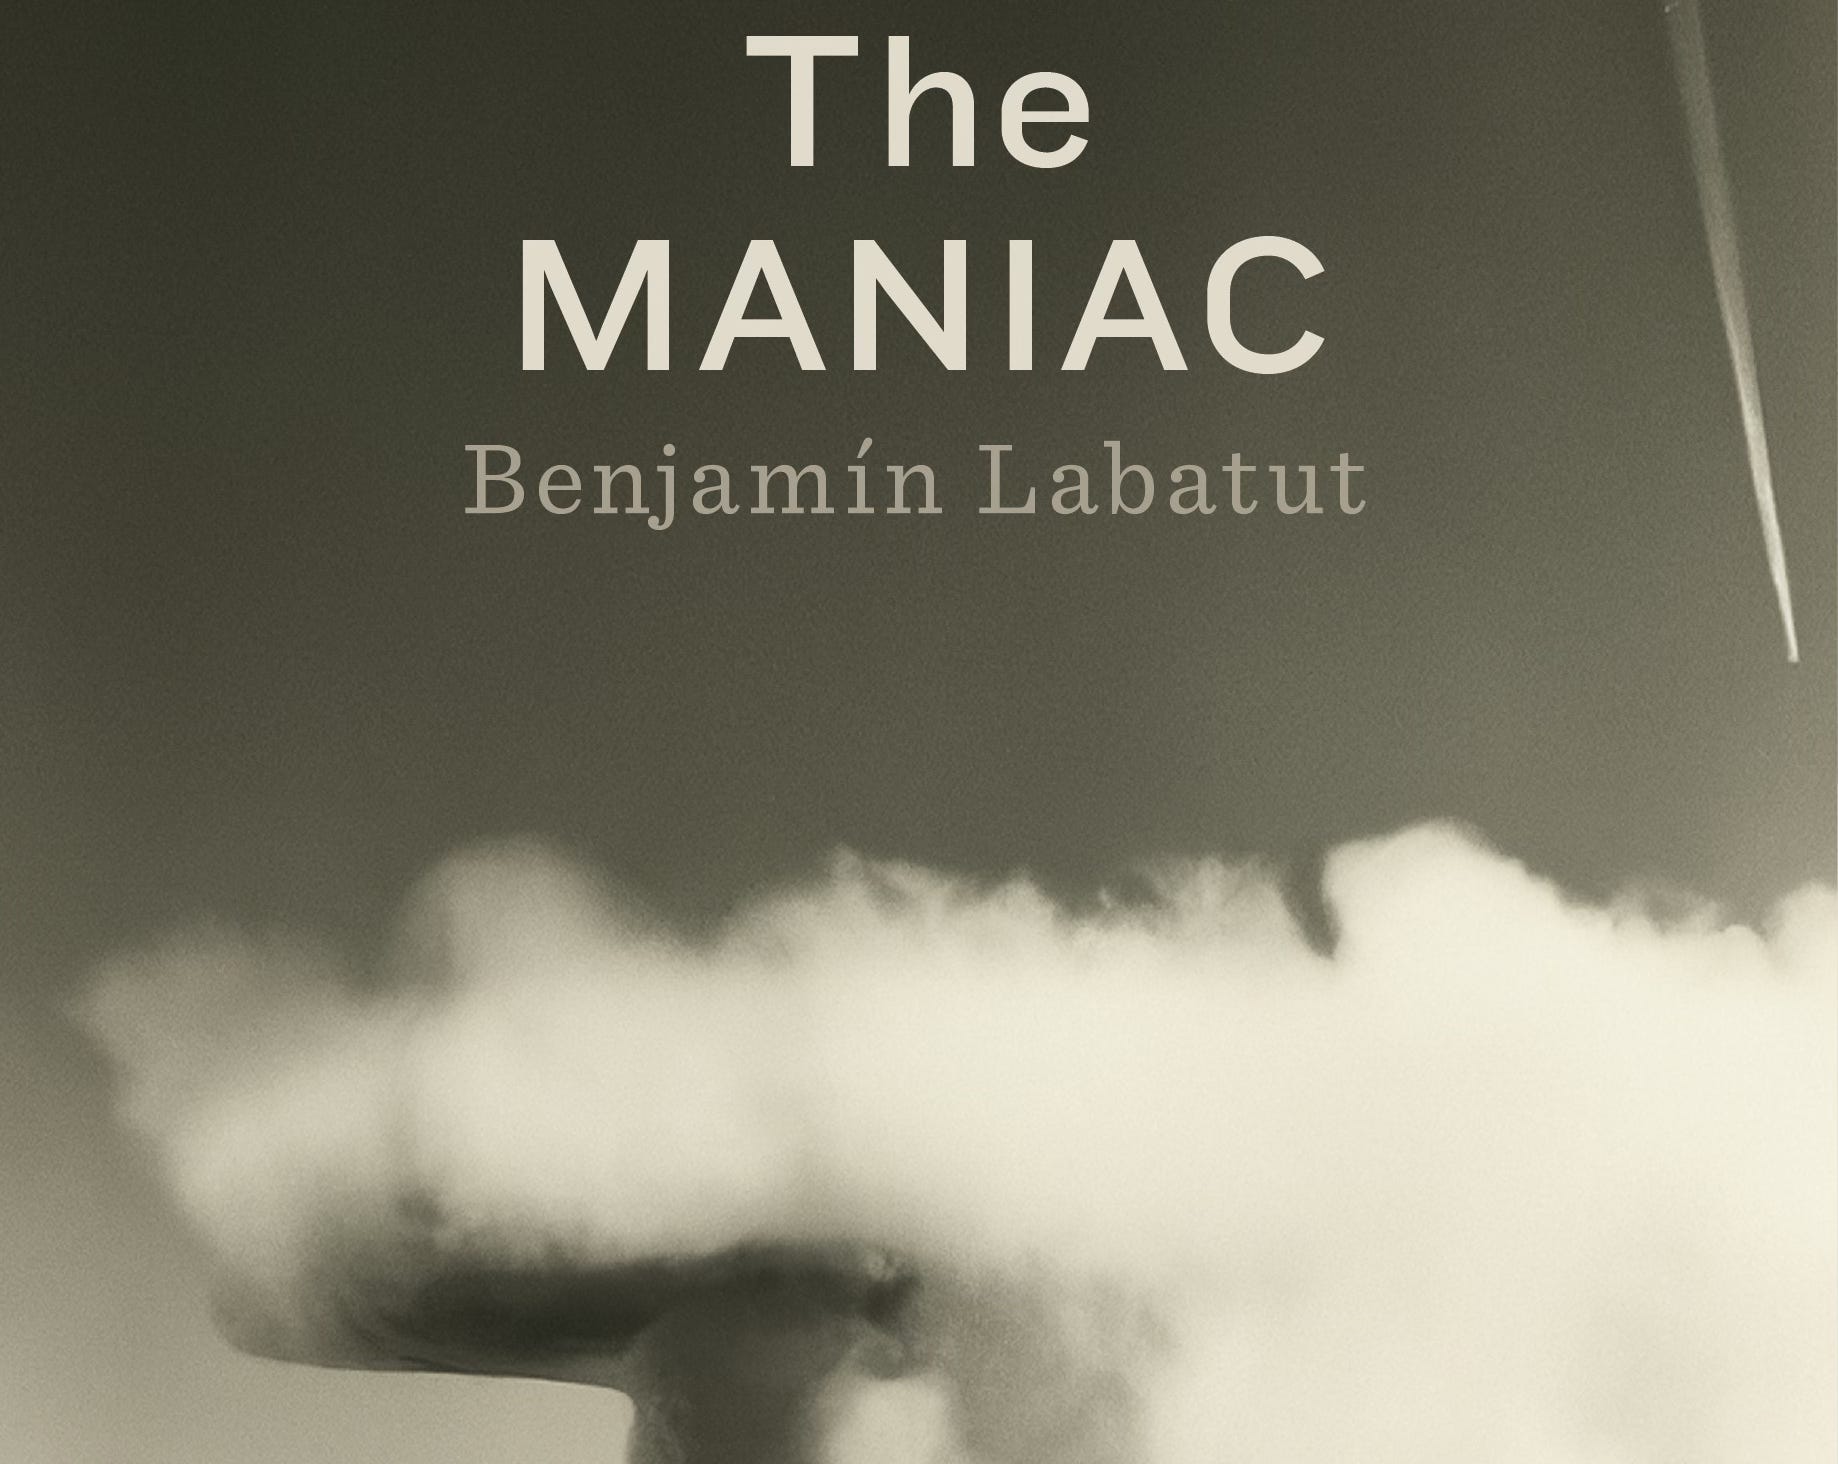 Notebook: THE MANIAC by Benjamín Labatut - by Tom Hall